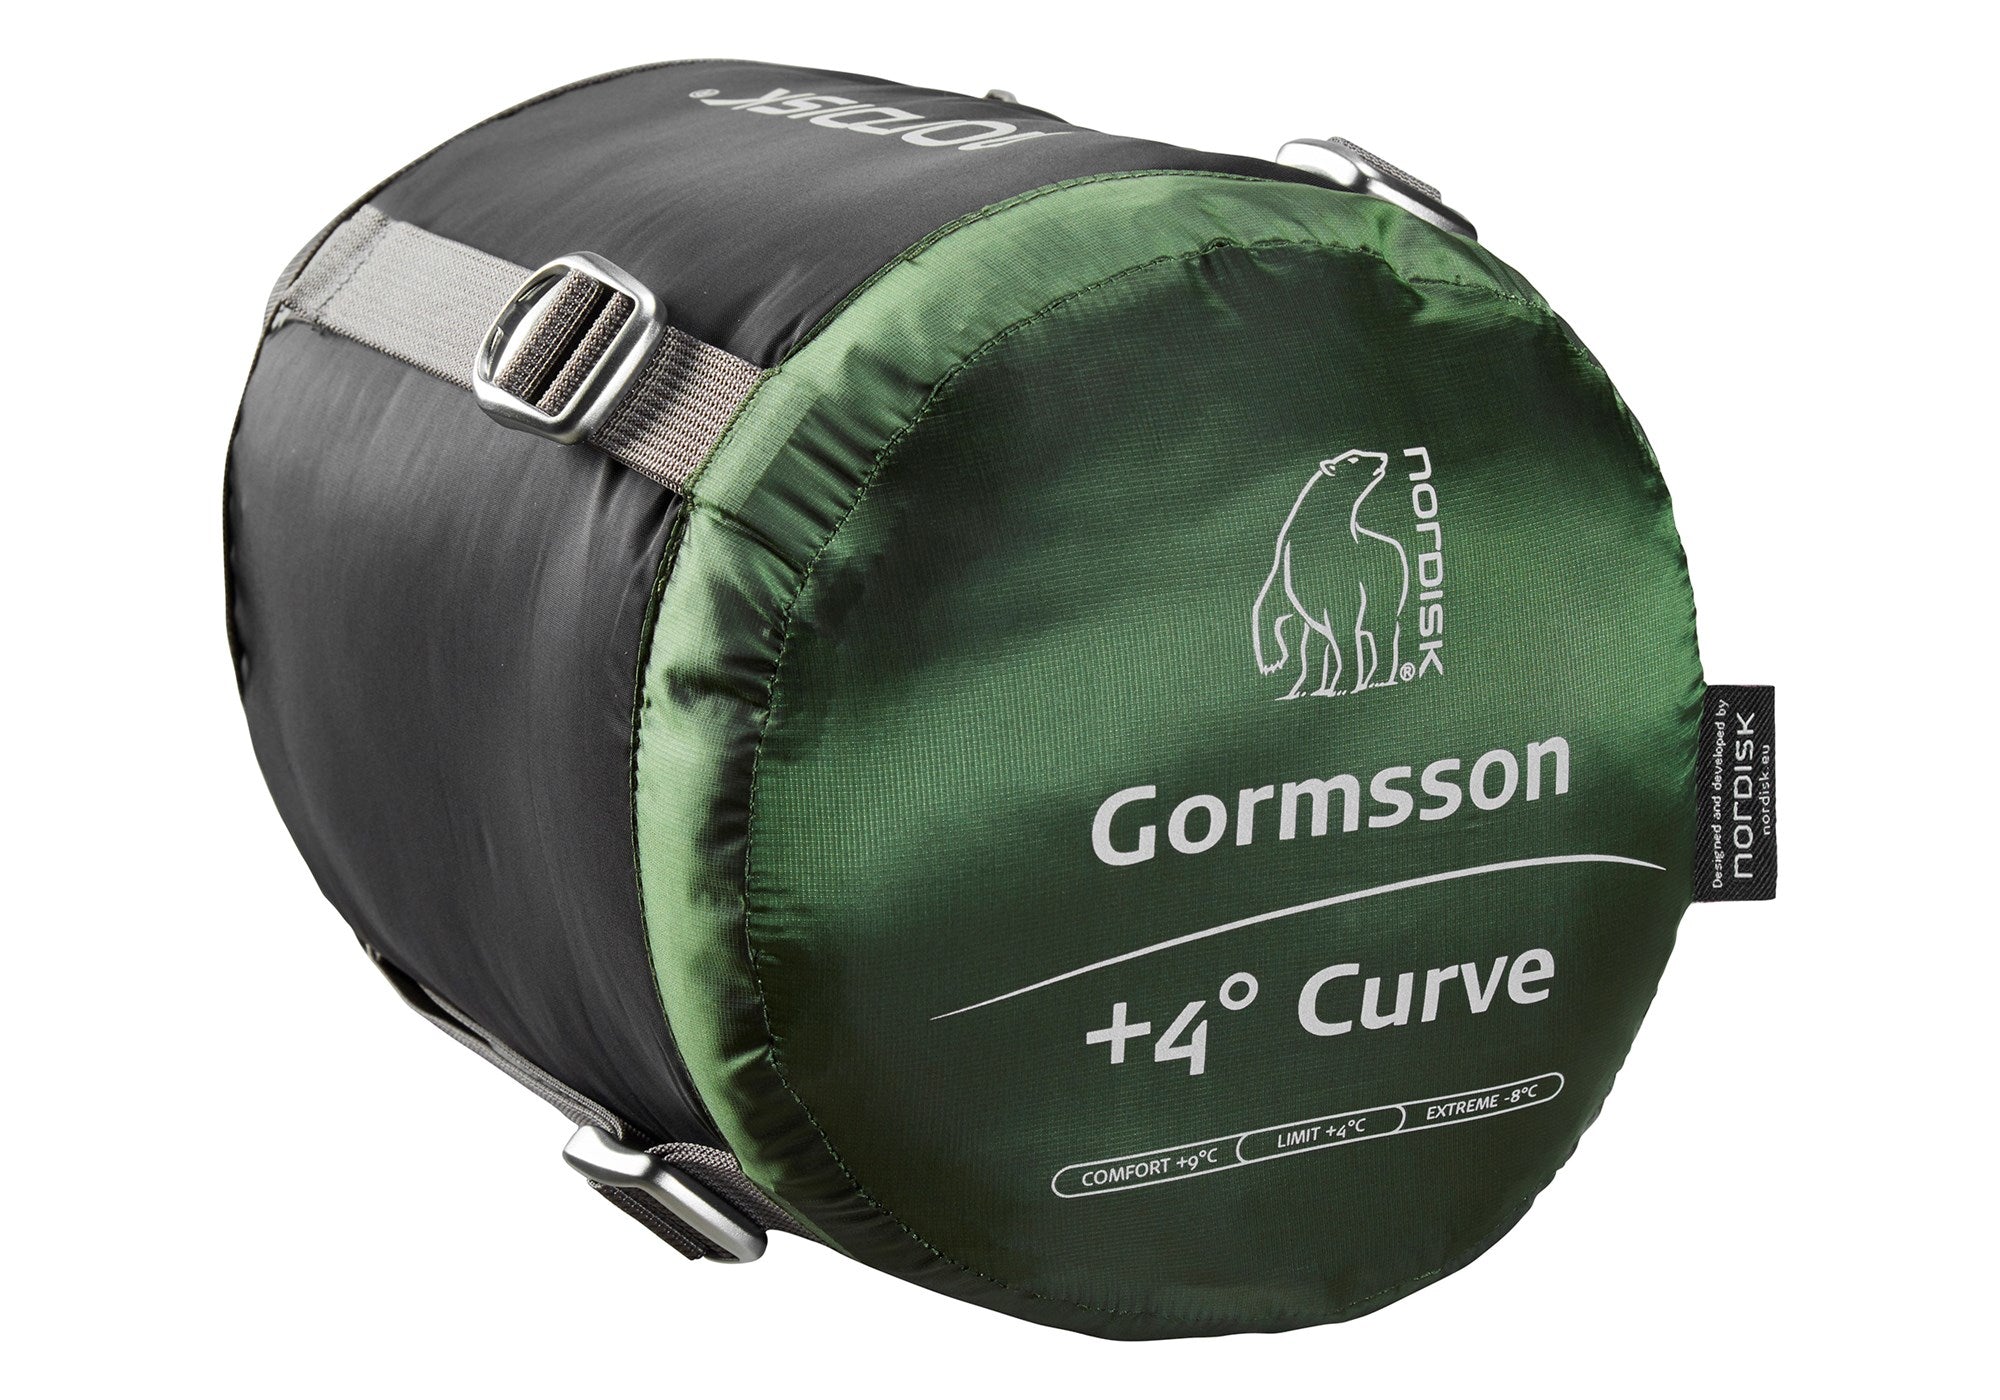 Gormsson +4 XL Curve